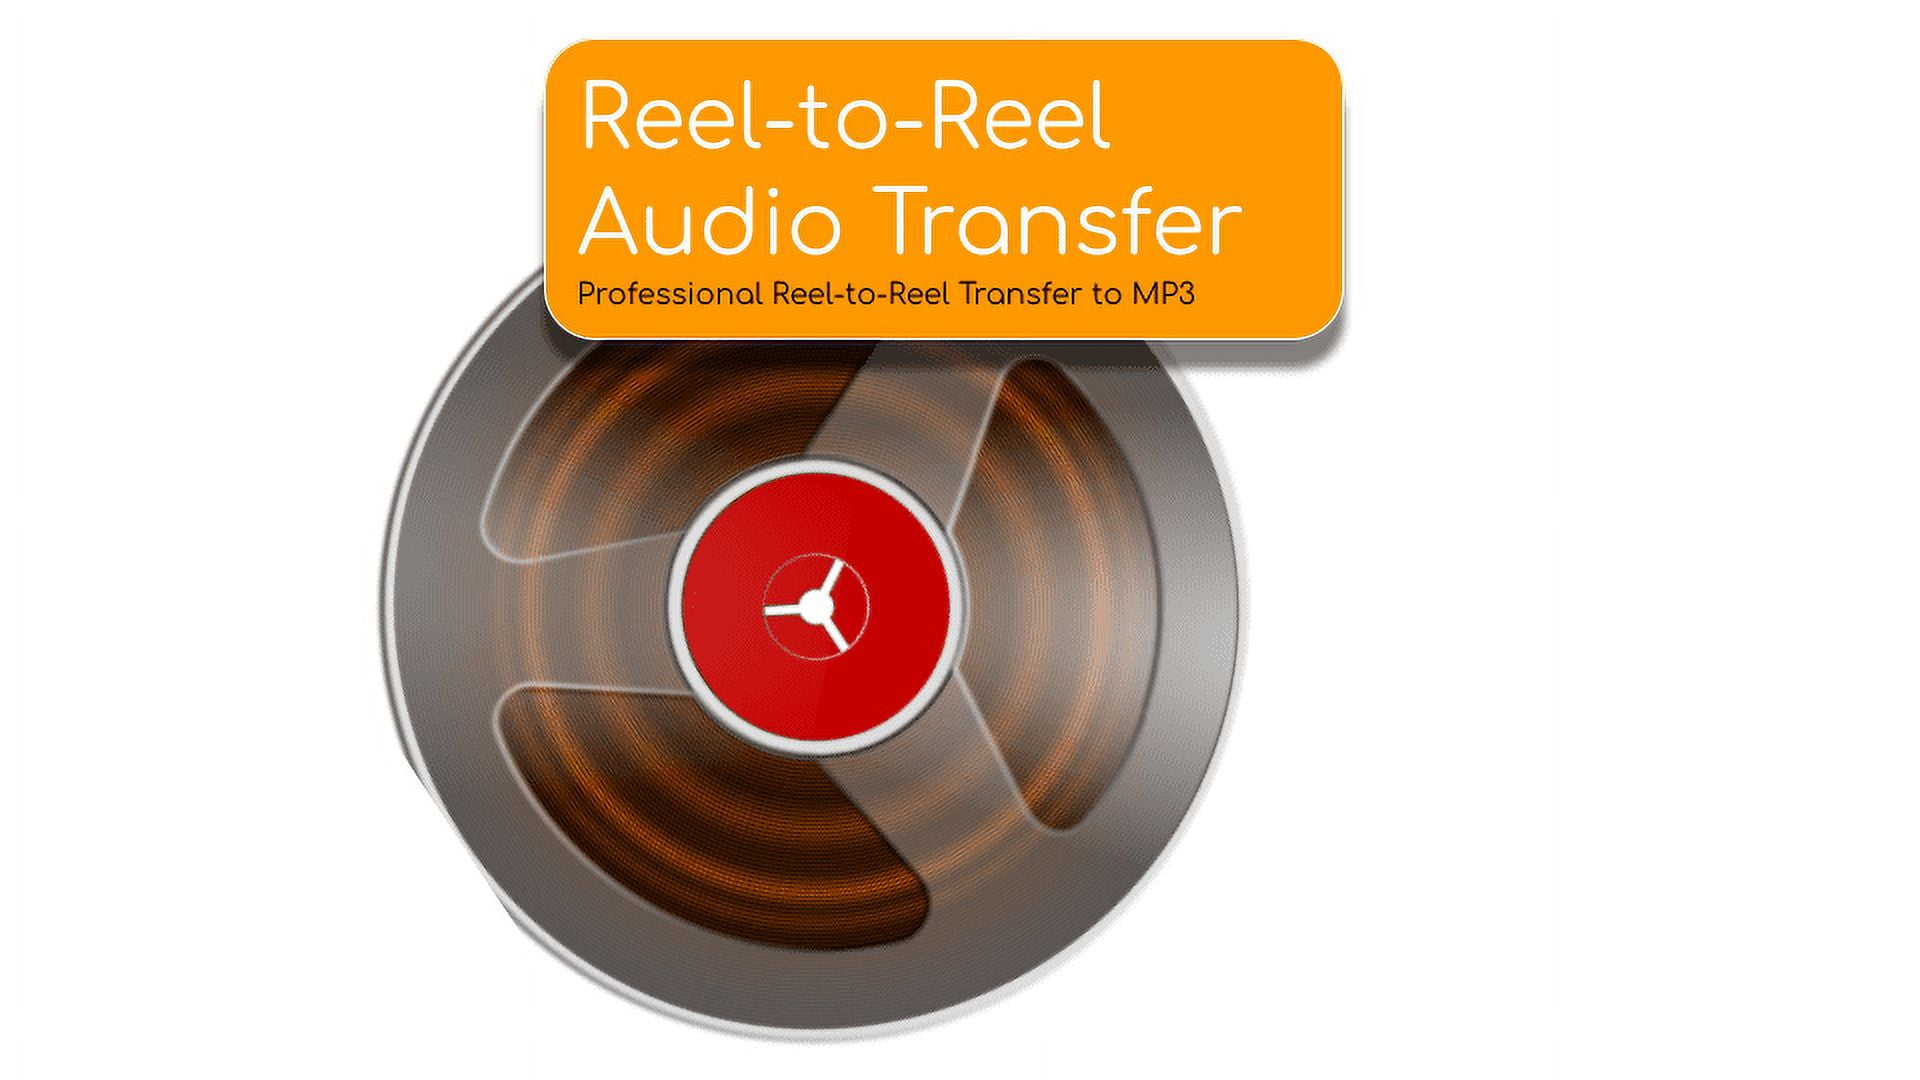 Reel-to-Reel Audio (3-inch reel) Transfer Service, Digitization to Digital  MP3 file by Lotus Media